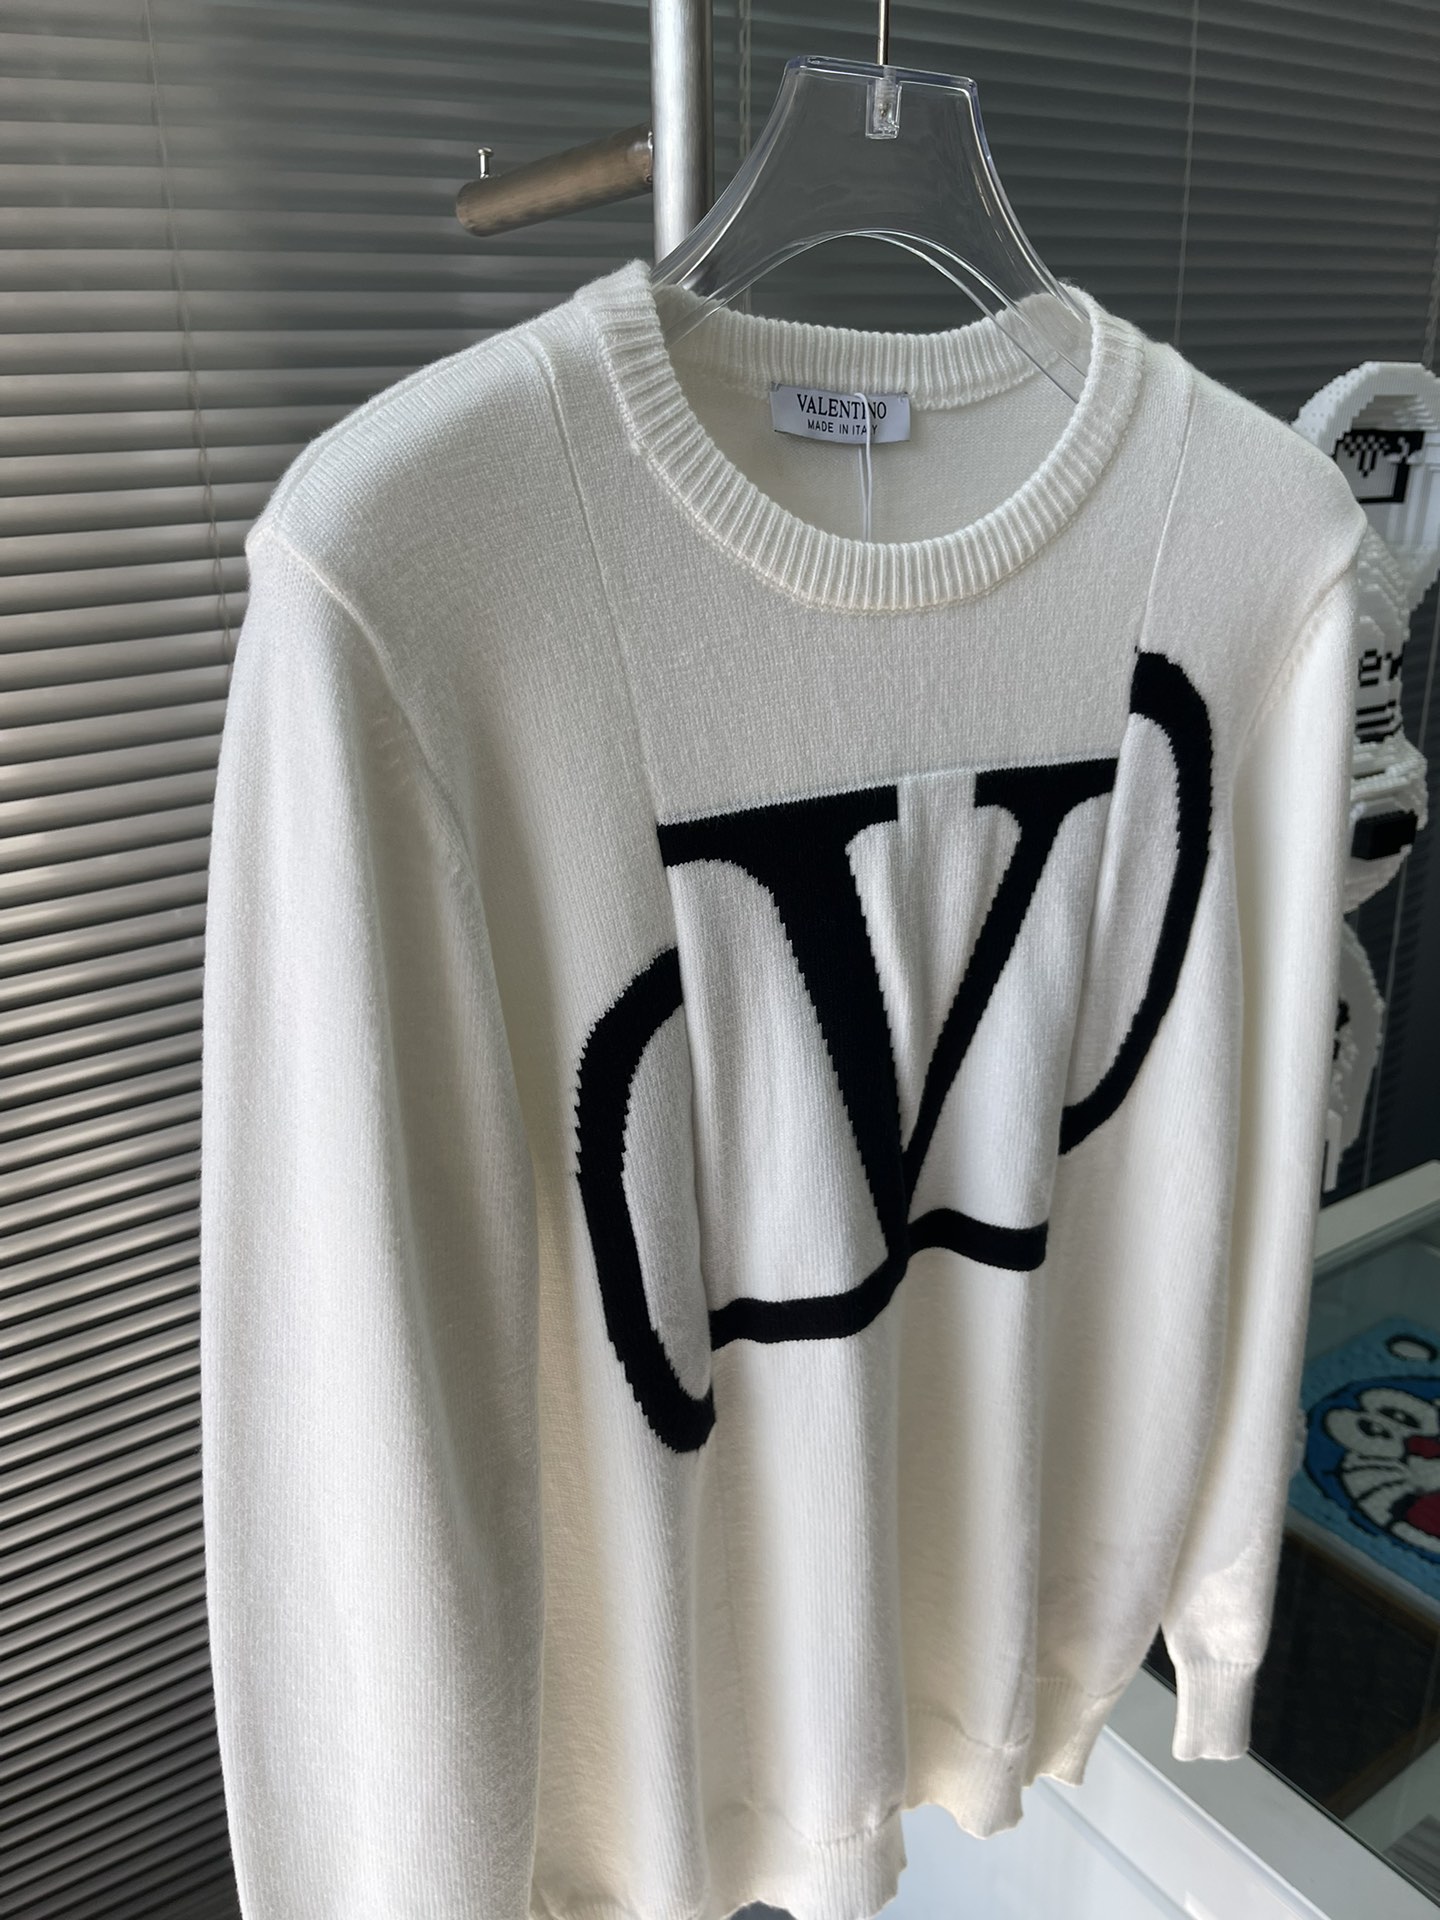 valentino ヴァレンティノ服レディース激安通販 HOT品質保証 トップス セーター 柔らかい 保温 暖かい ホワイト_5